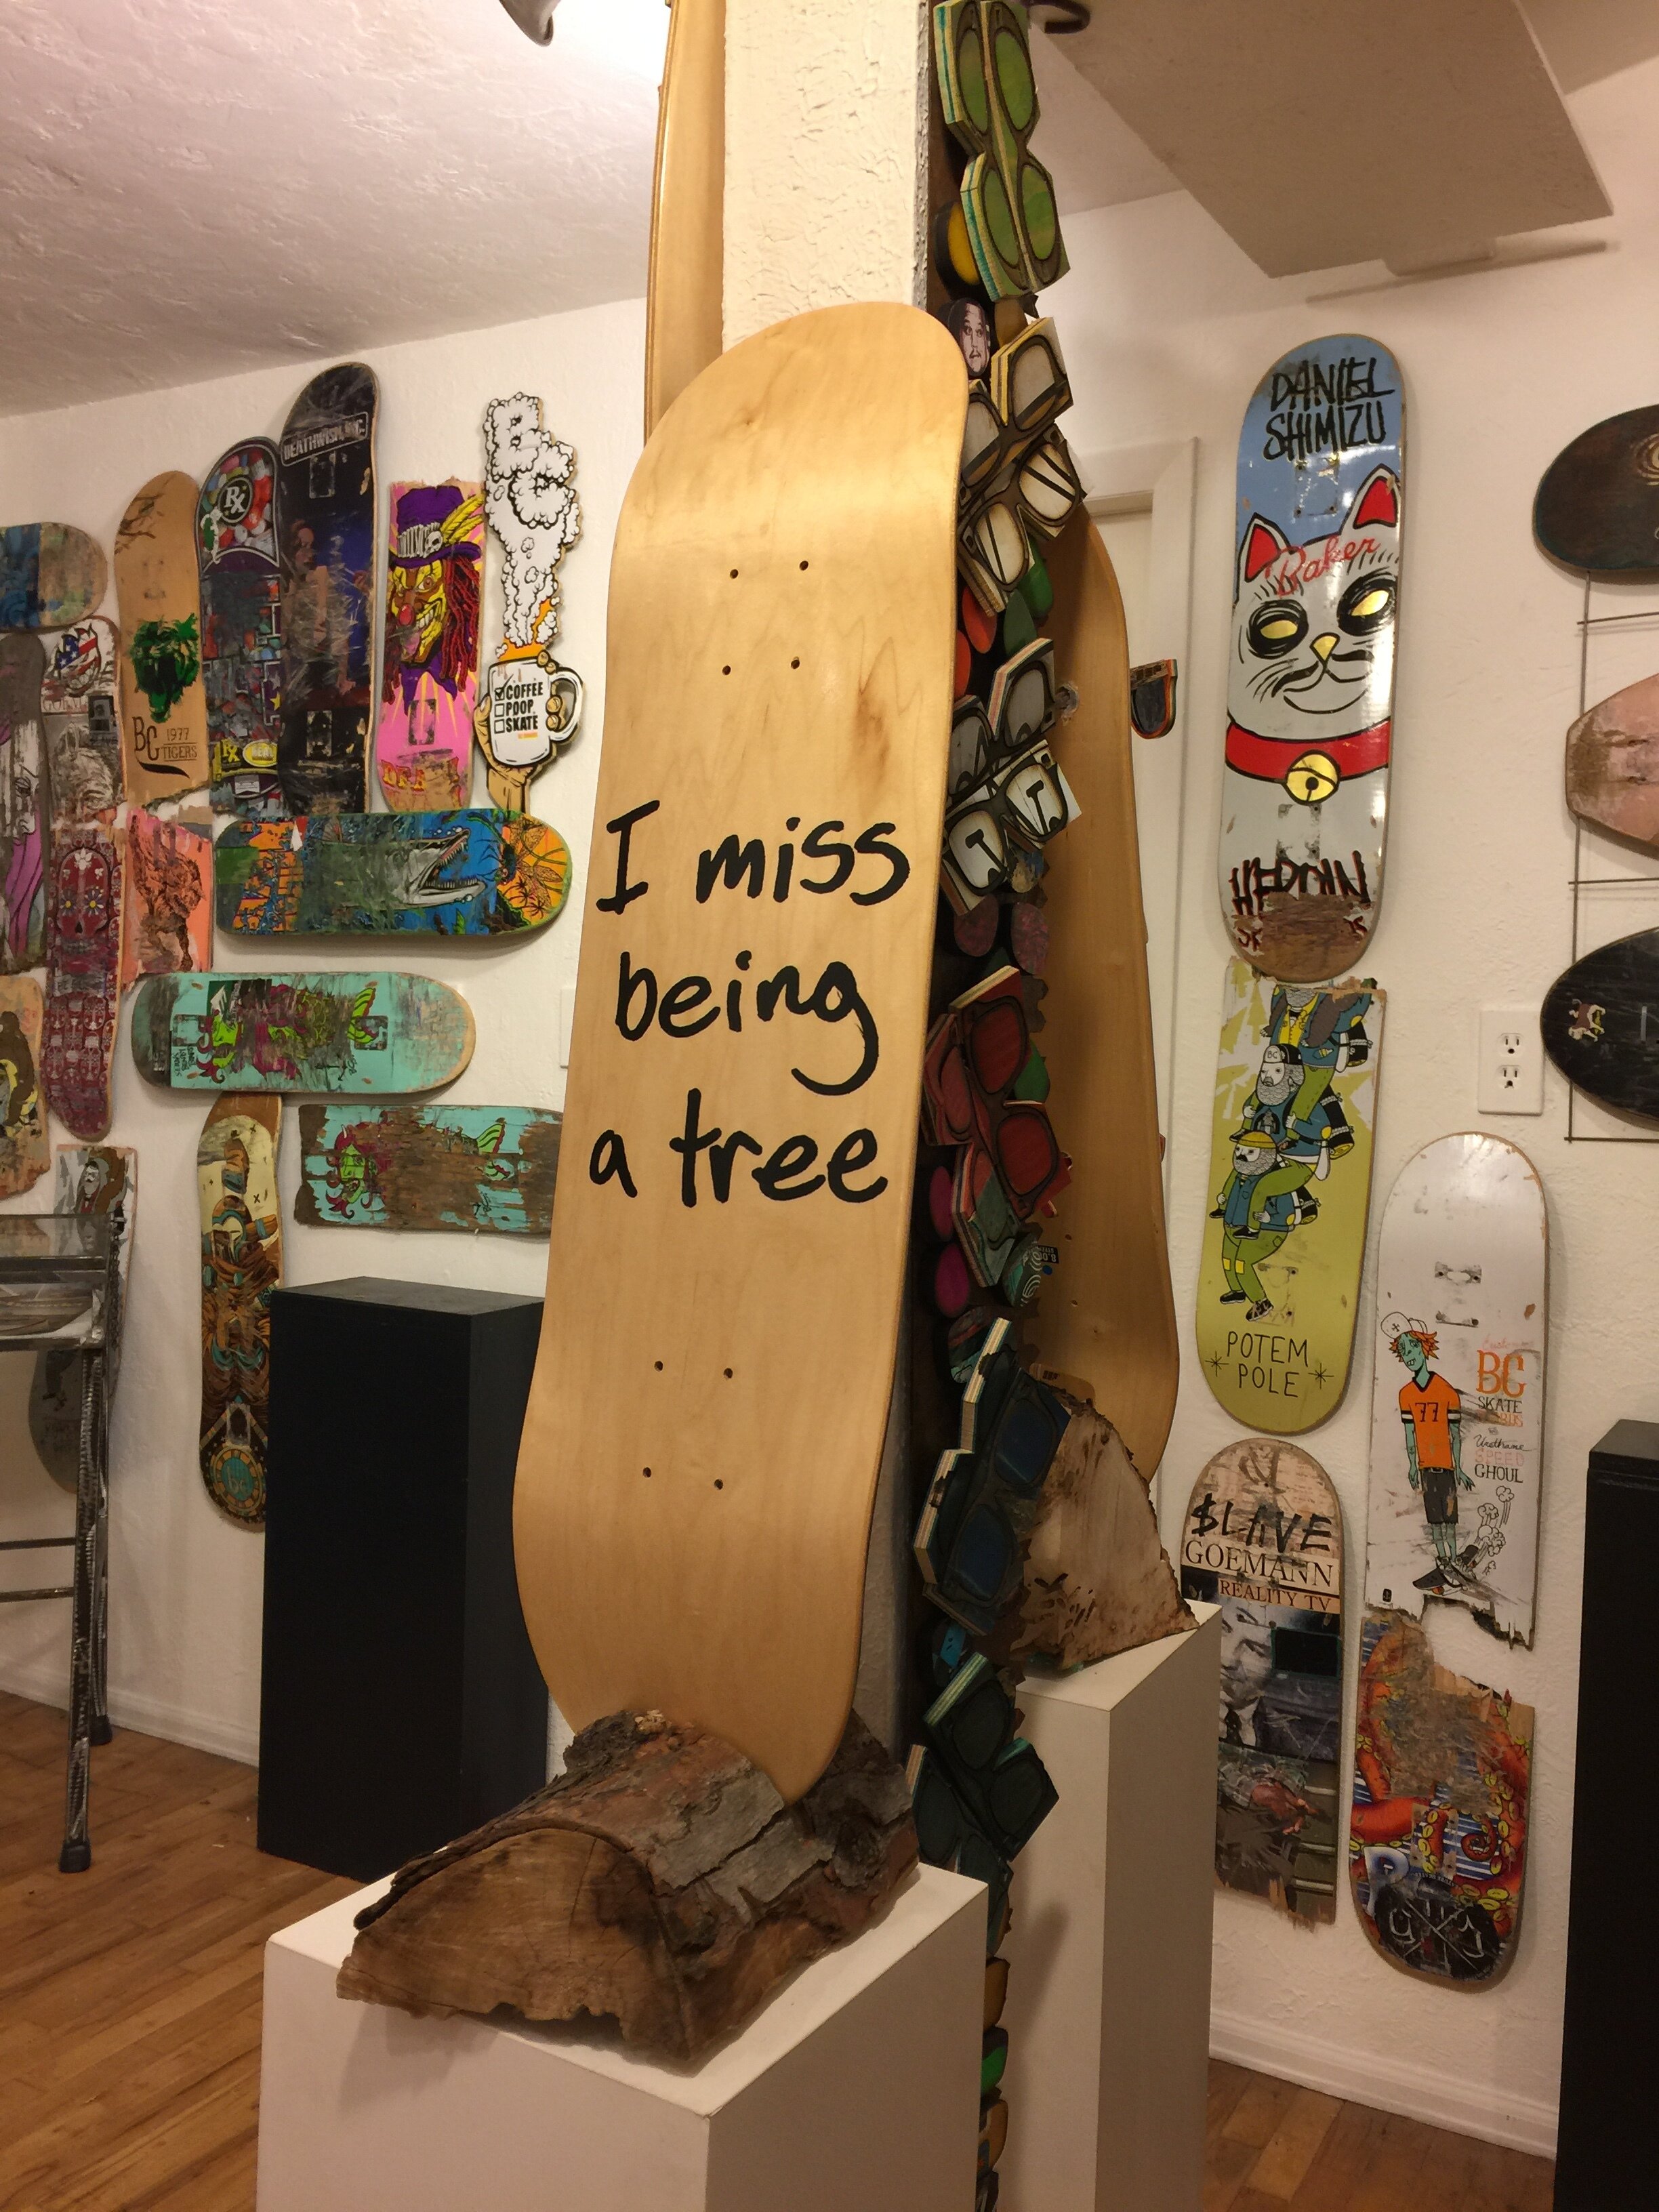 Promo Skateboards with Custom Graphics